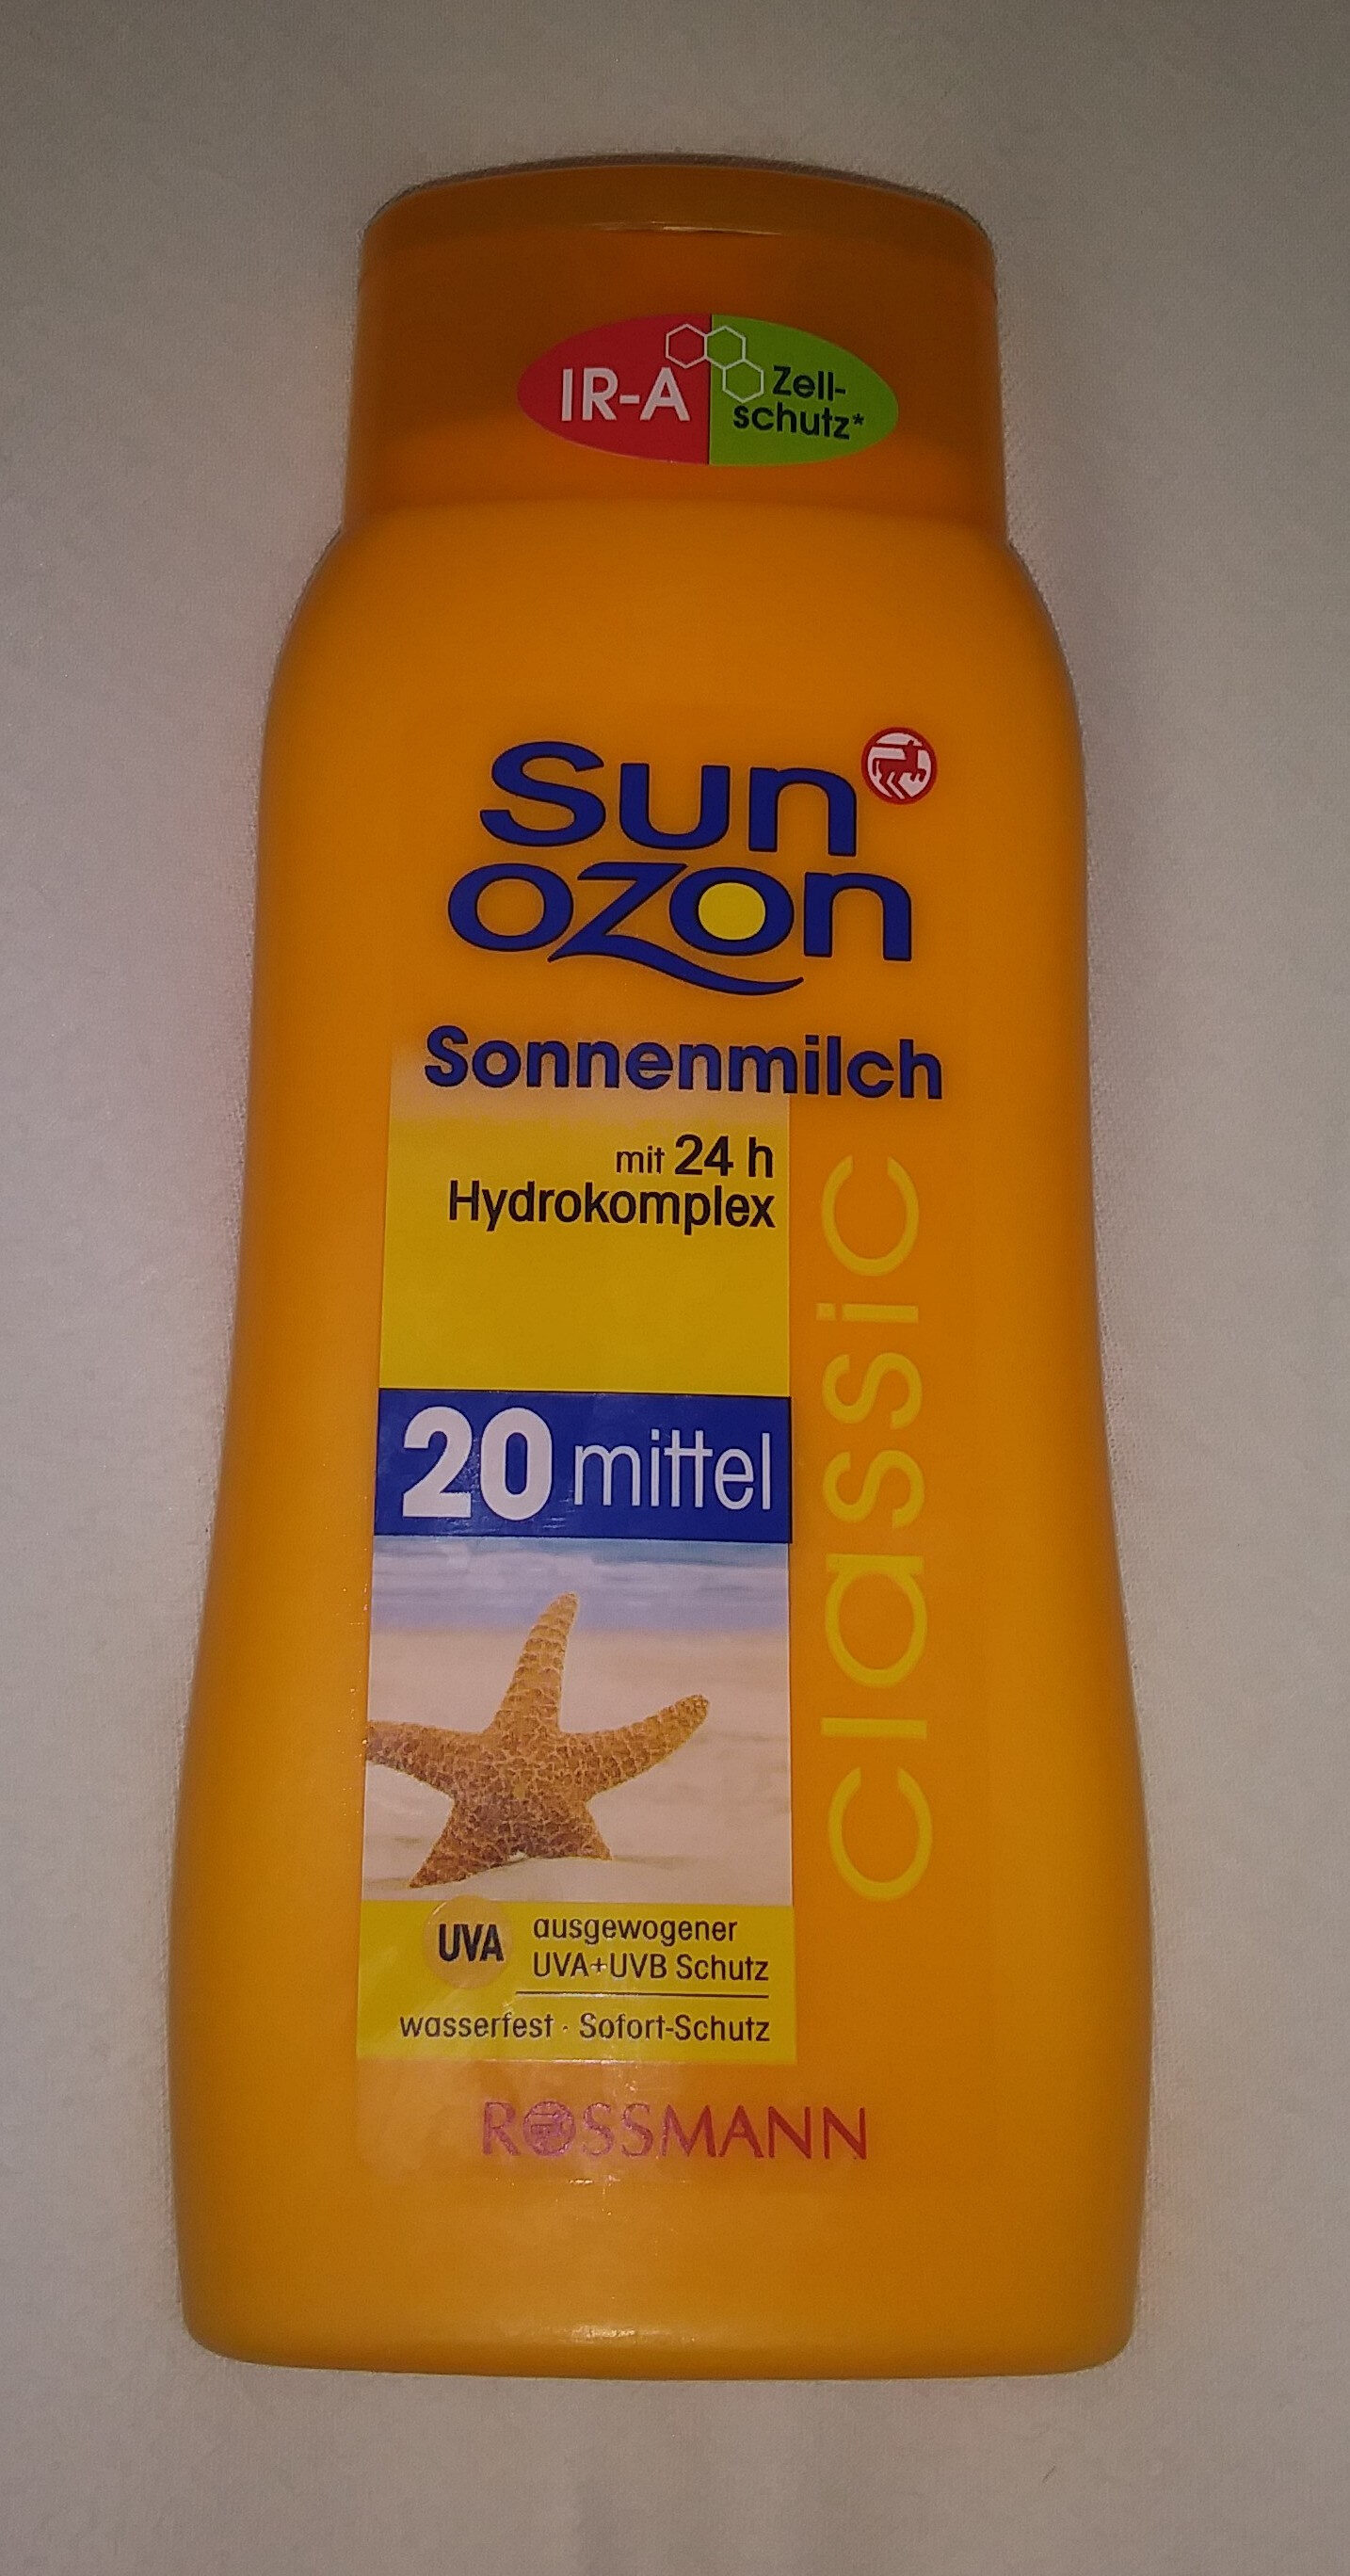 Sonnenmilch 20 mittel - Product - de